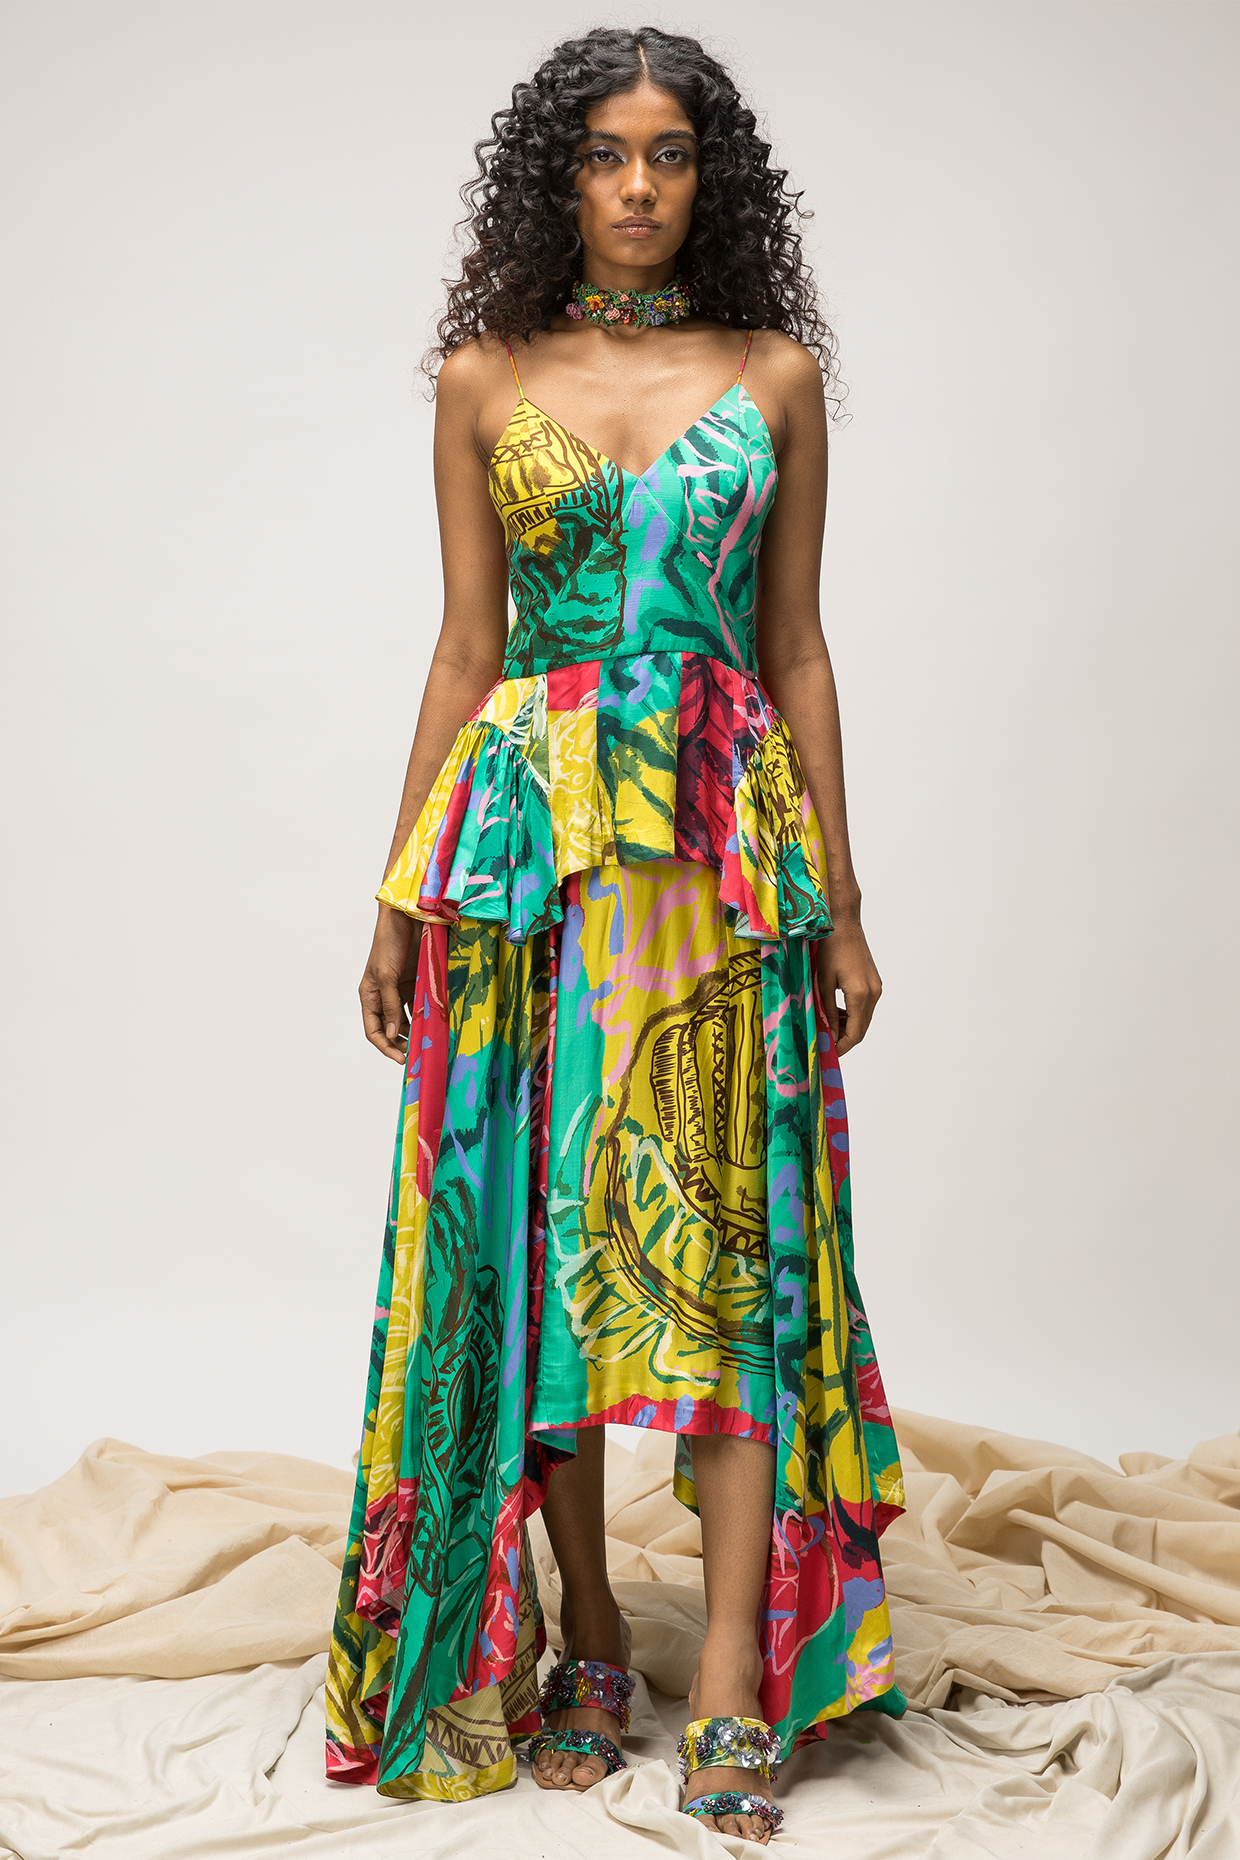 Beautiful Bodycon Lace Dress Designs Ideas _ Latest Lace Bodycon Dresses |  Classy gowns, Lace dress design, African design dresses